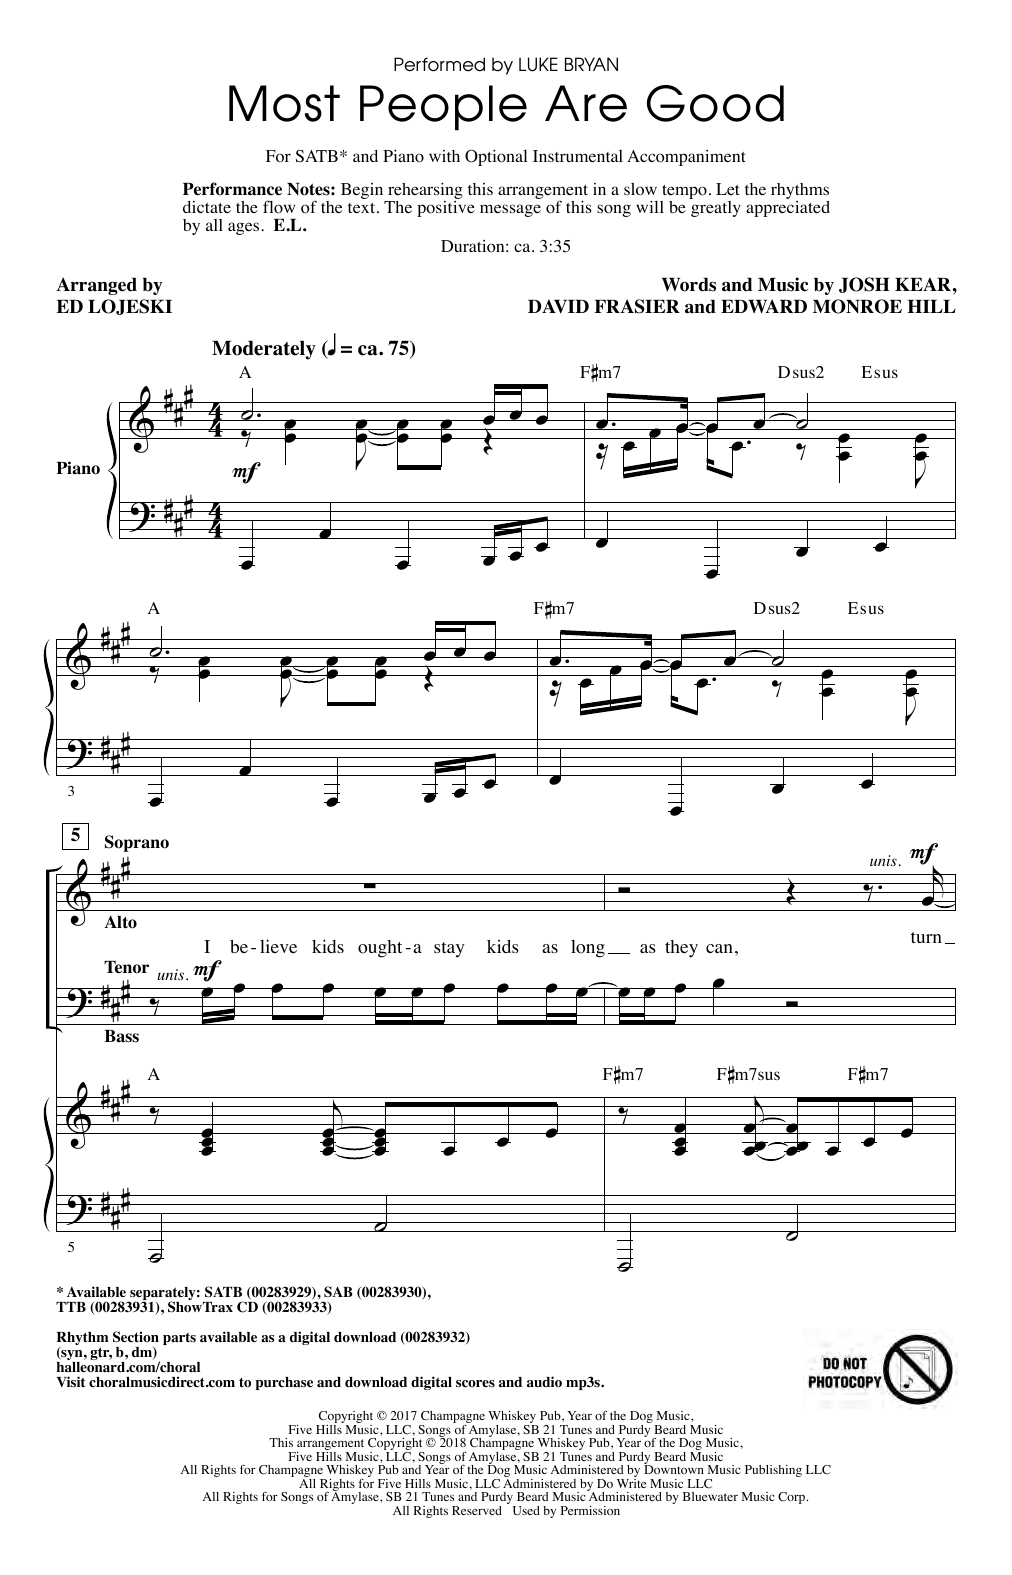 Luke Bryan Most People Are Good (arr. Ed Lojeski) Sheet Music Notes & Chords for SATB Choir - Download or Print PDF